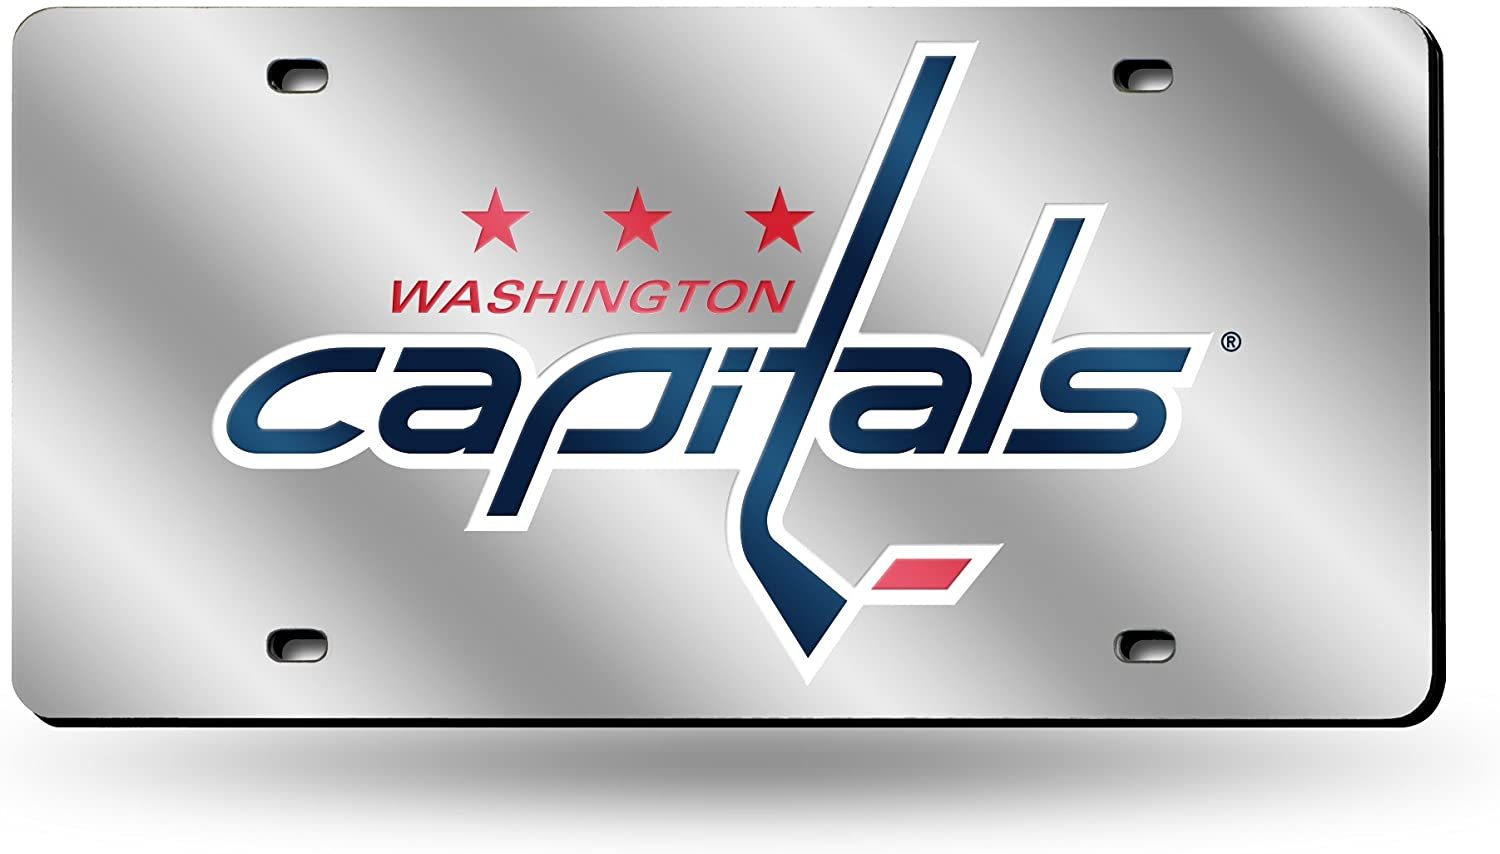 Washington Capitals Premium Laser Cut Tag License Plate, Mirrored Acrylic Inlaid, 12x6 Inch